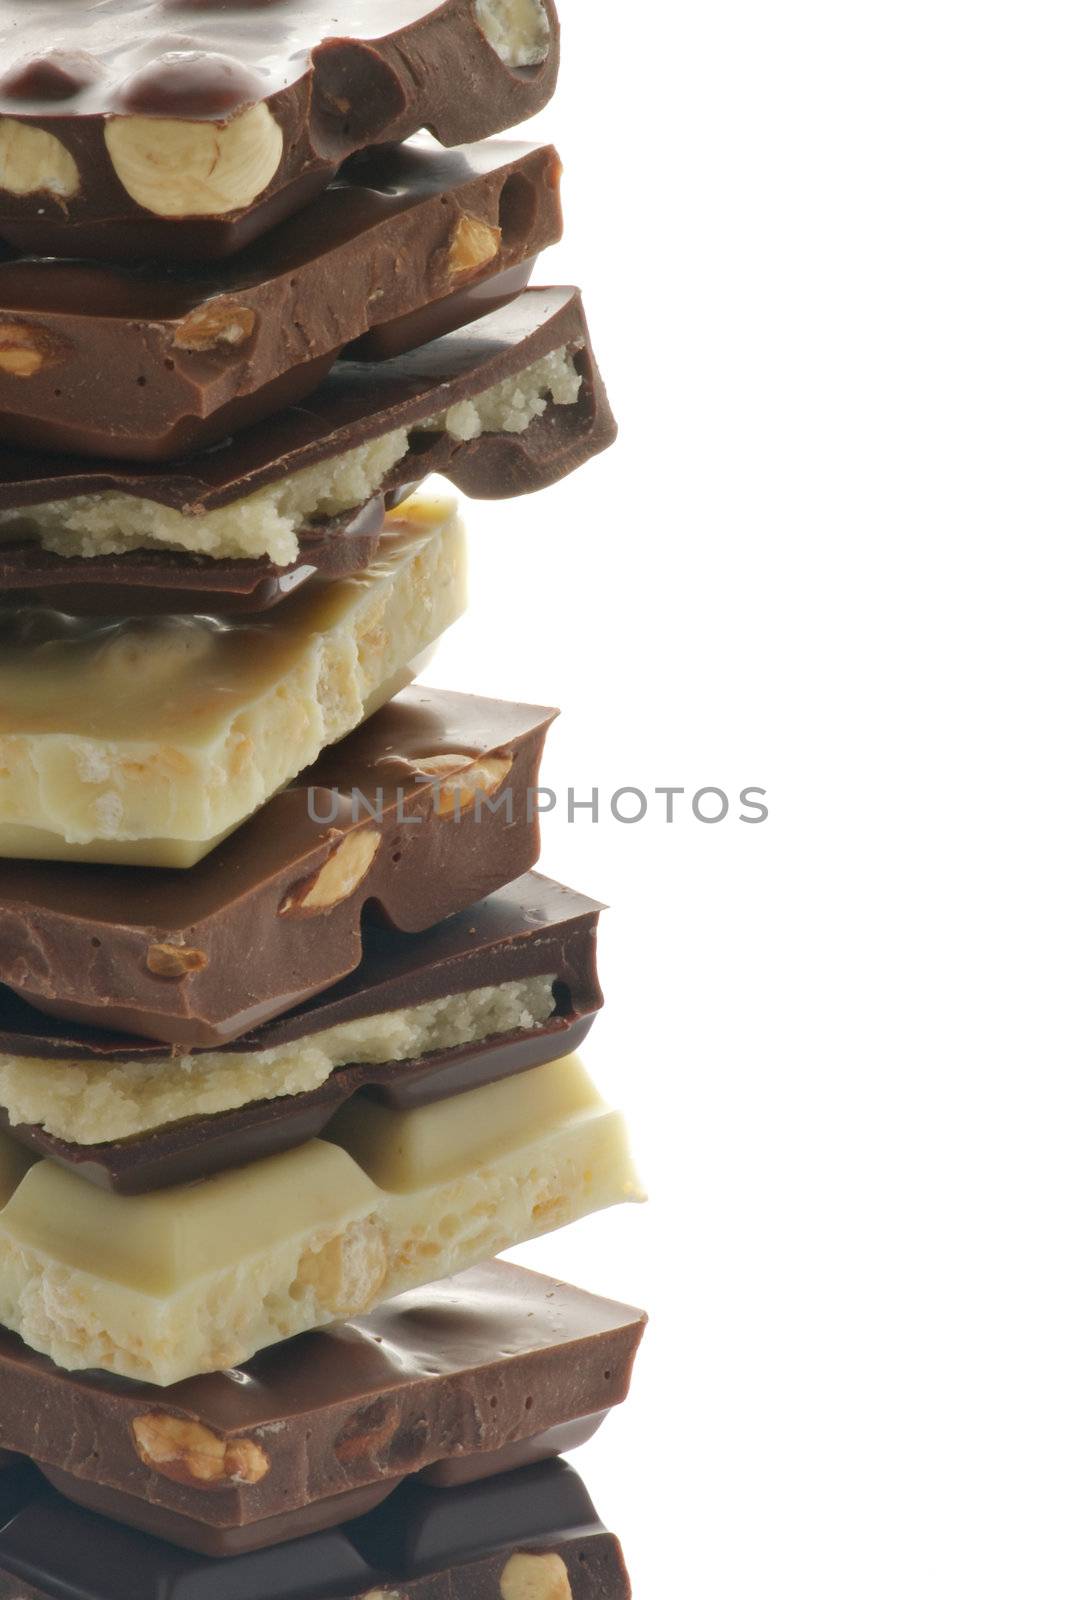 Chocolate Blocks Frame by zhekos